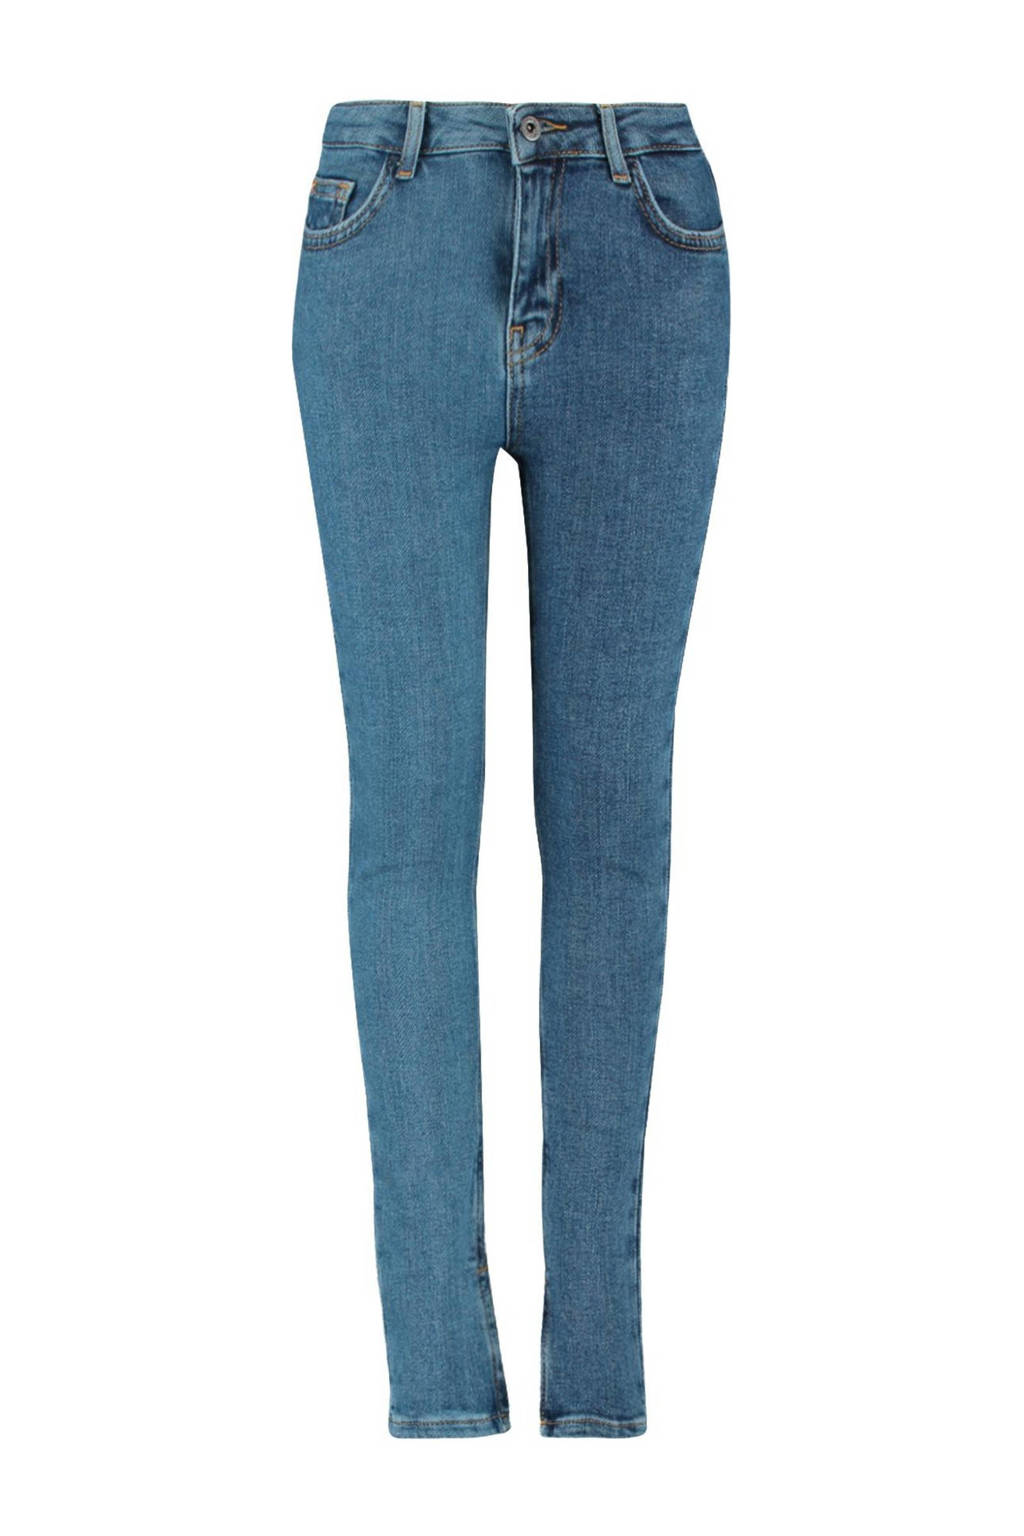 CoolCat Junior high waist skinny jeans medium blue, Medium blue